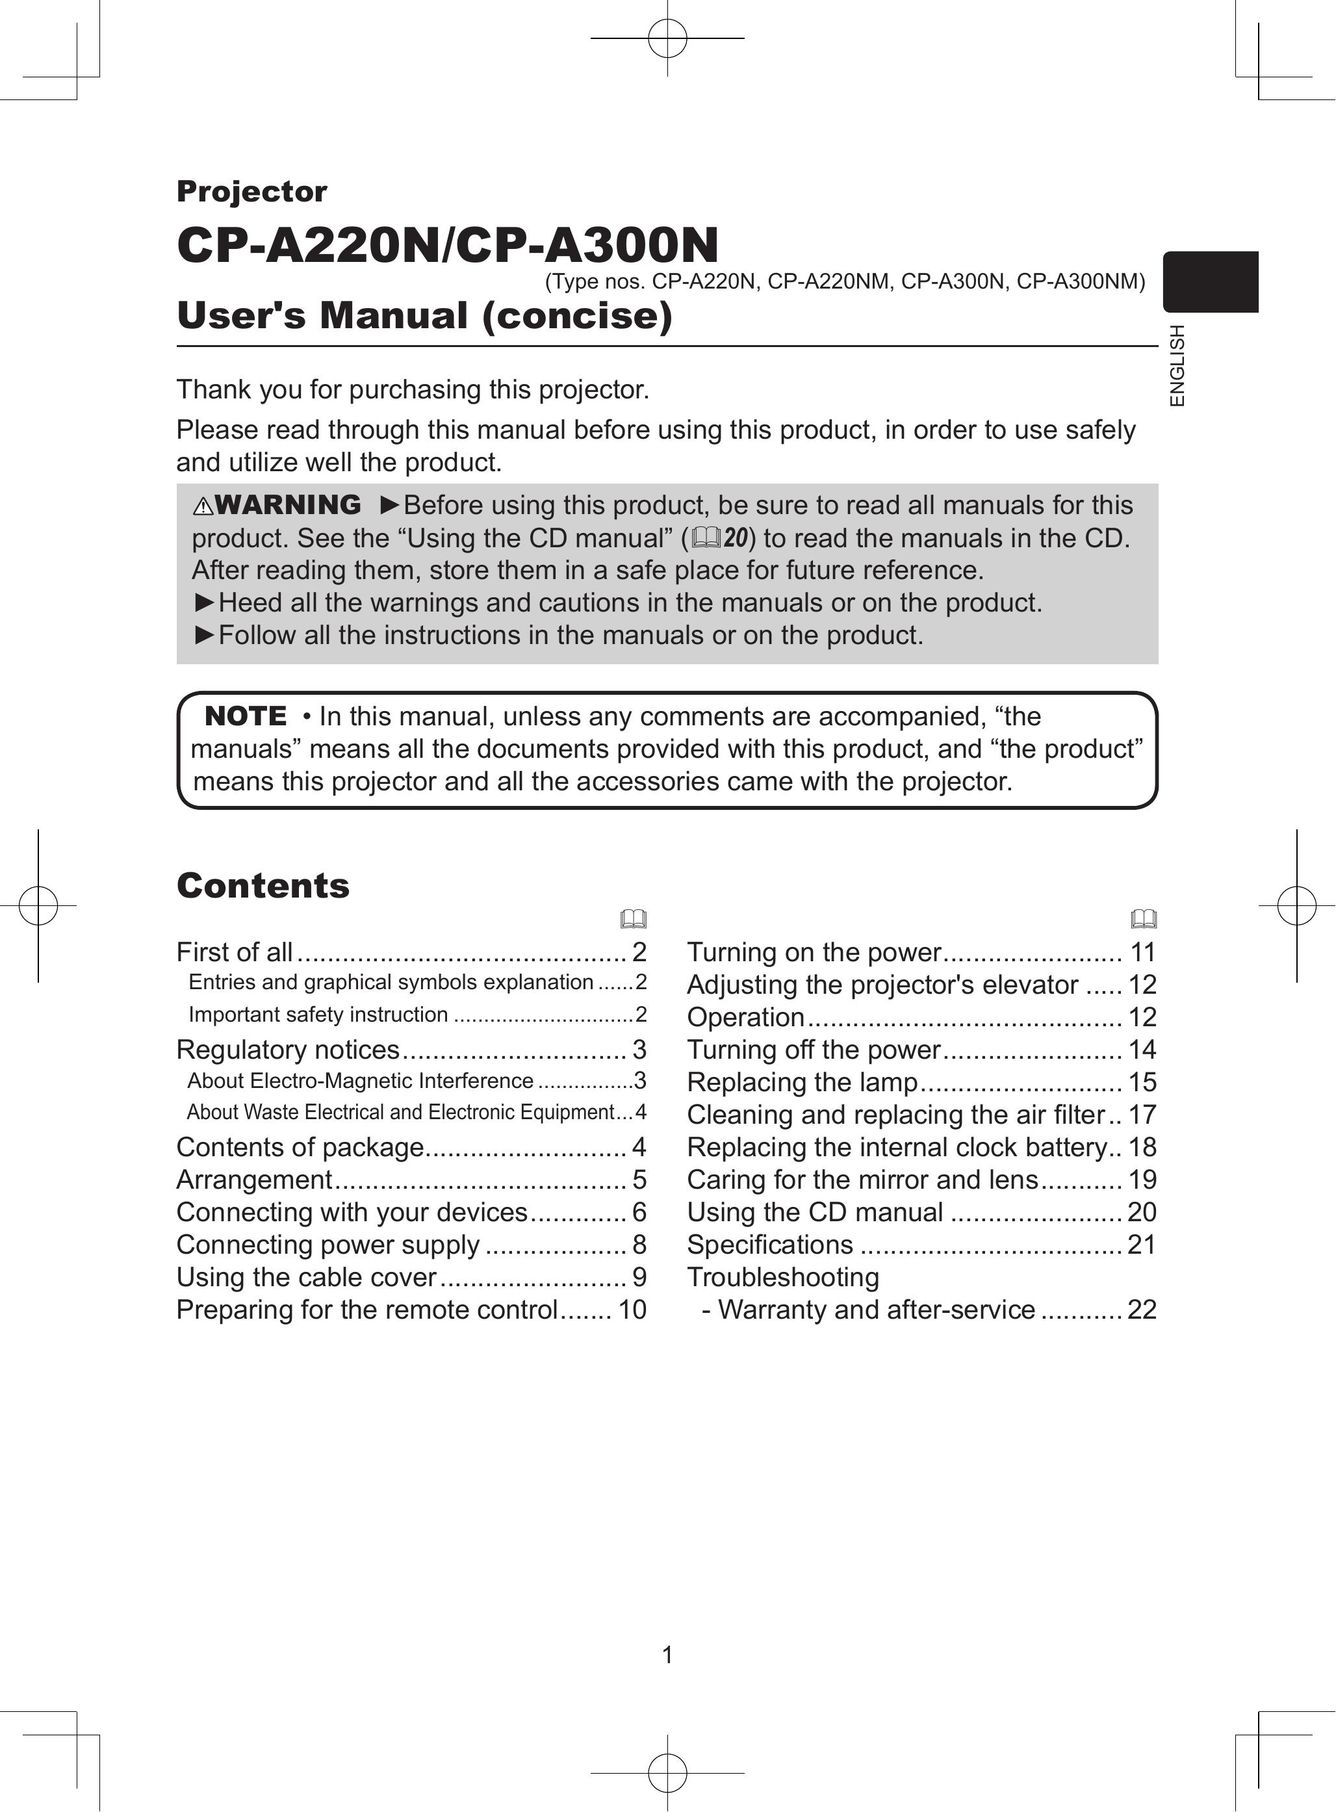 Hitachi CP-A300N Projector User Manual